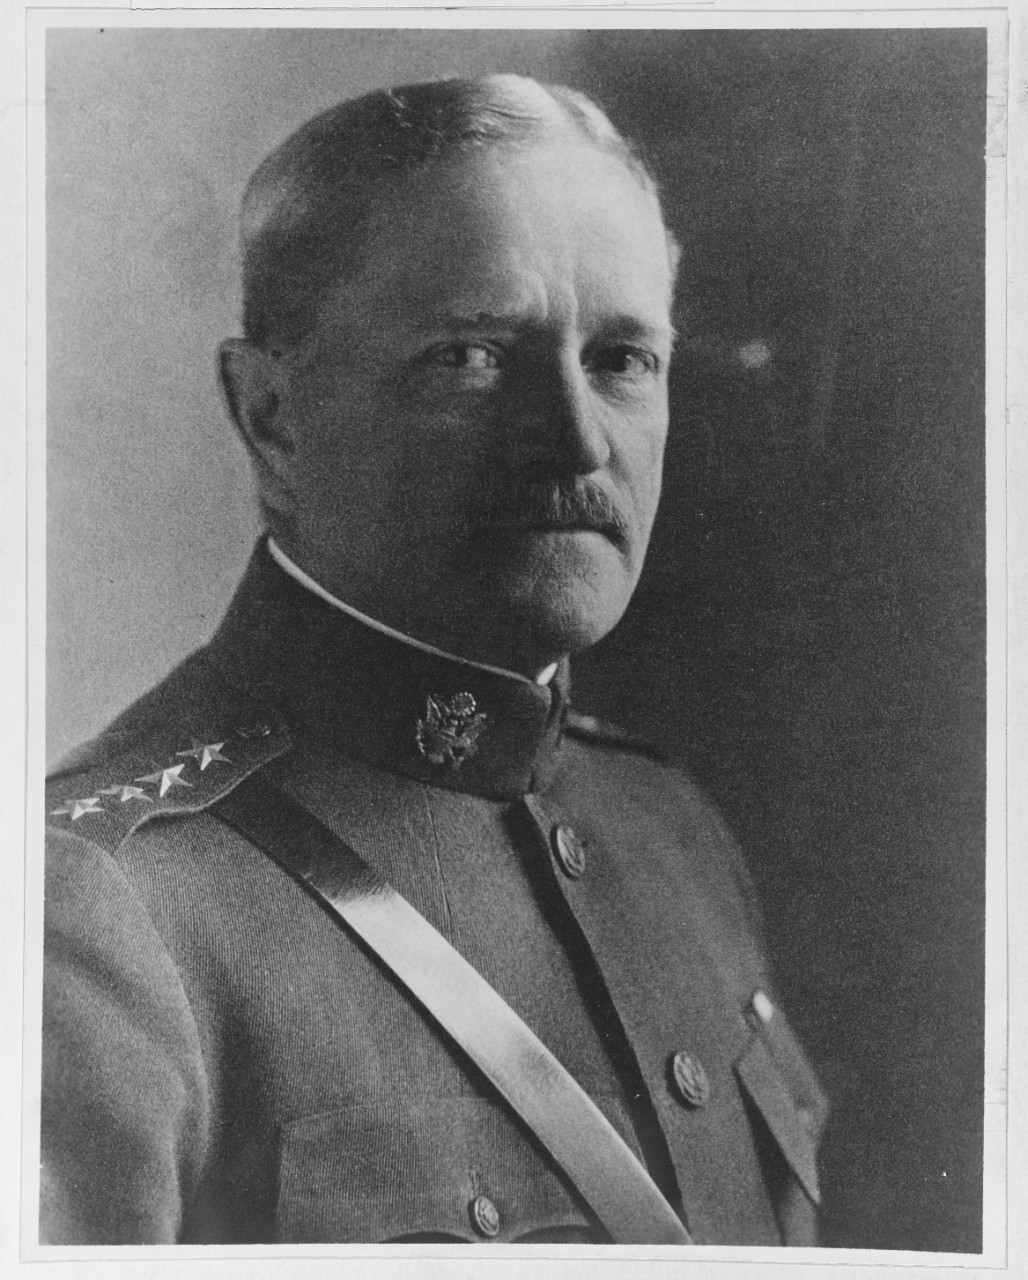 Portrait of John J. Pershing, General, United States Army. 